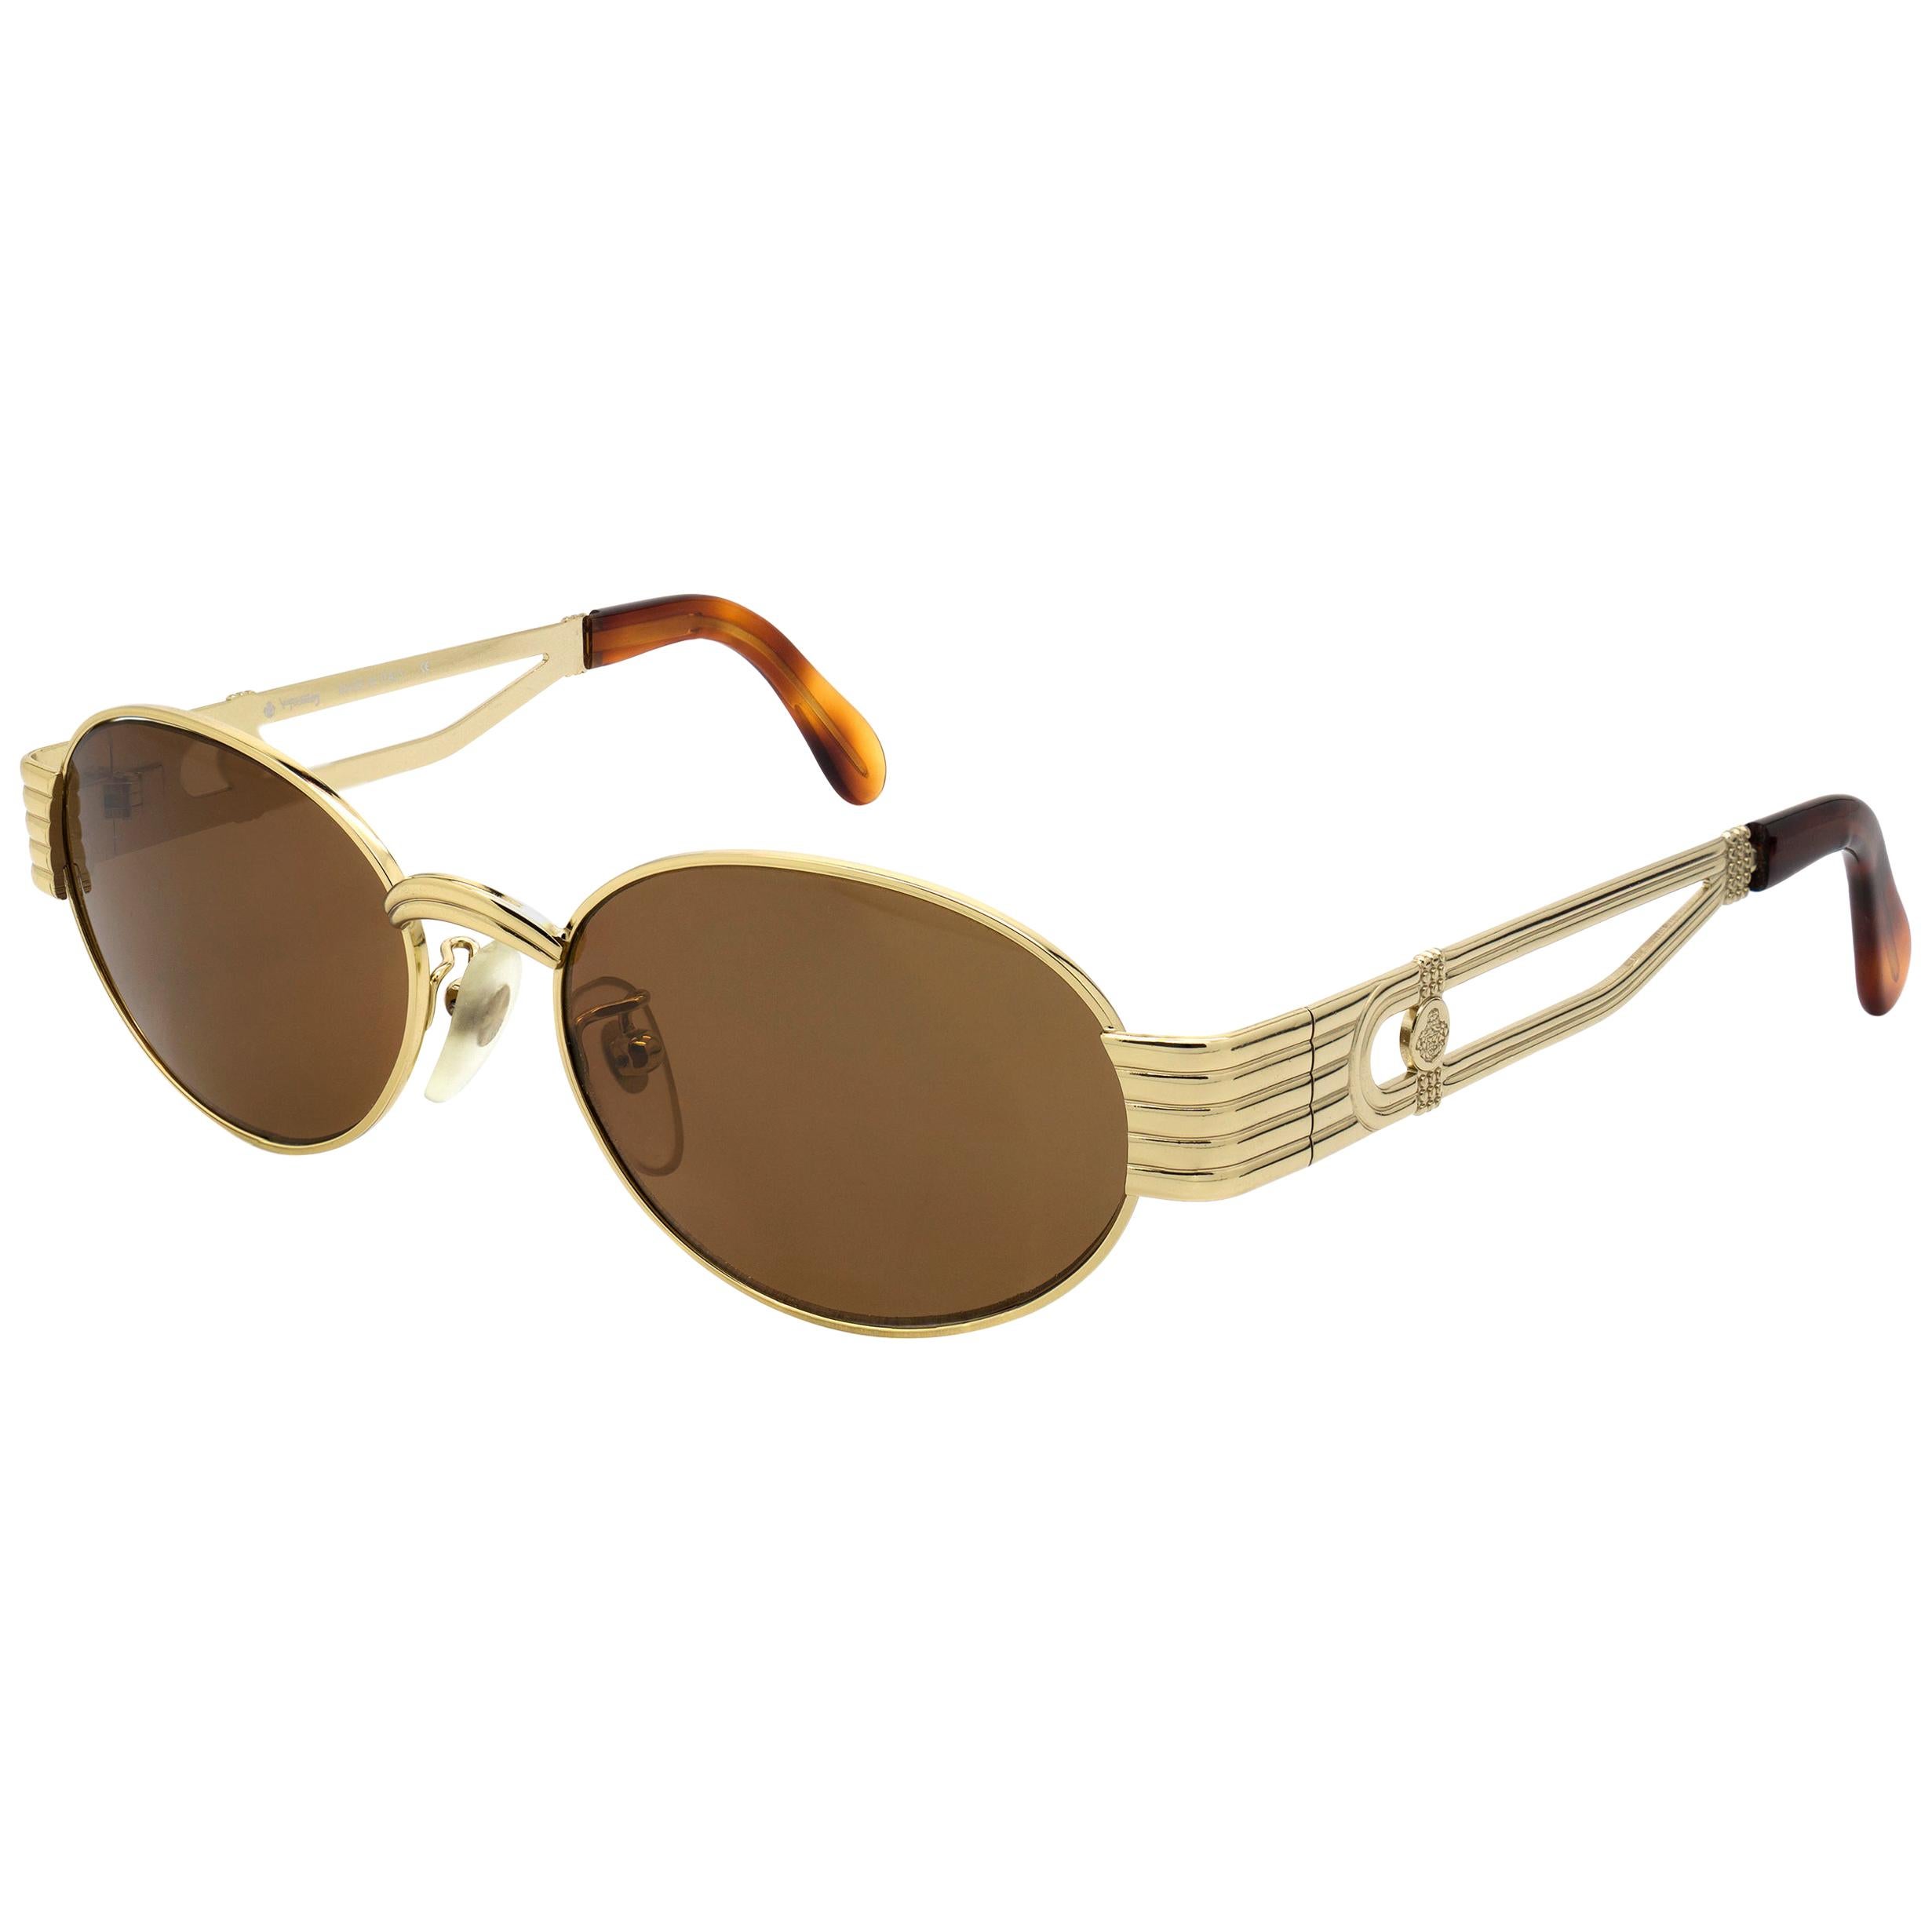 Prince Egon von Furstenberg vintage sunglasses, Italy 80s For Sale